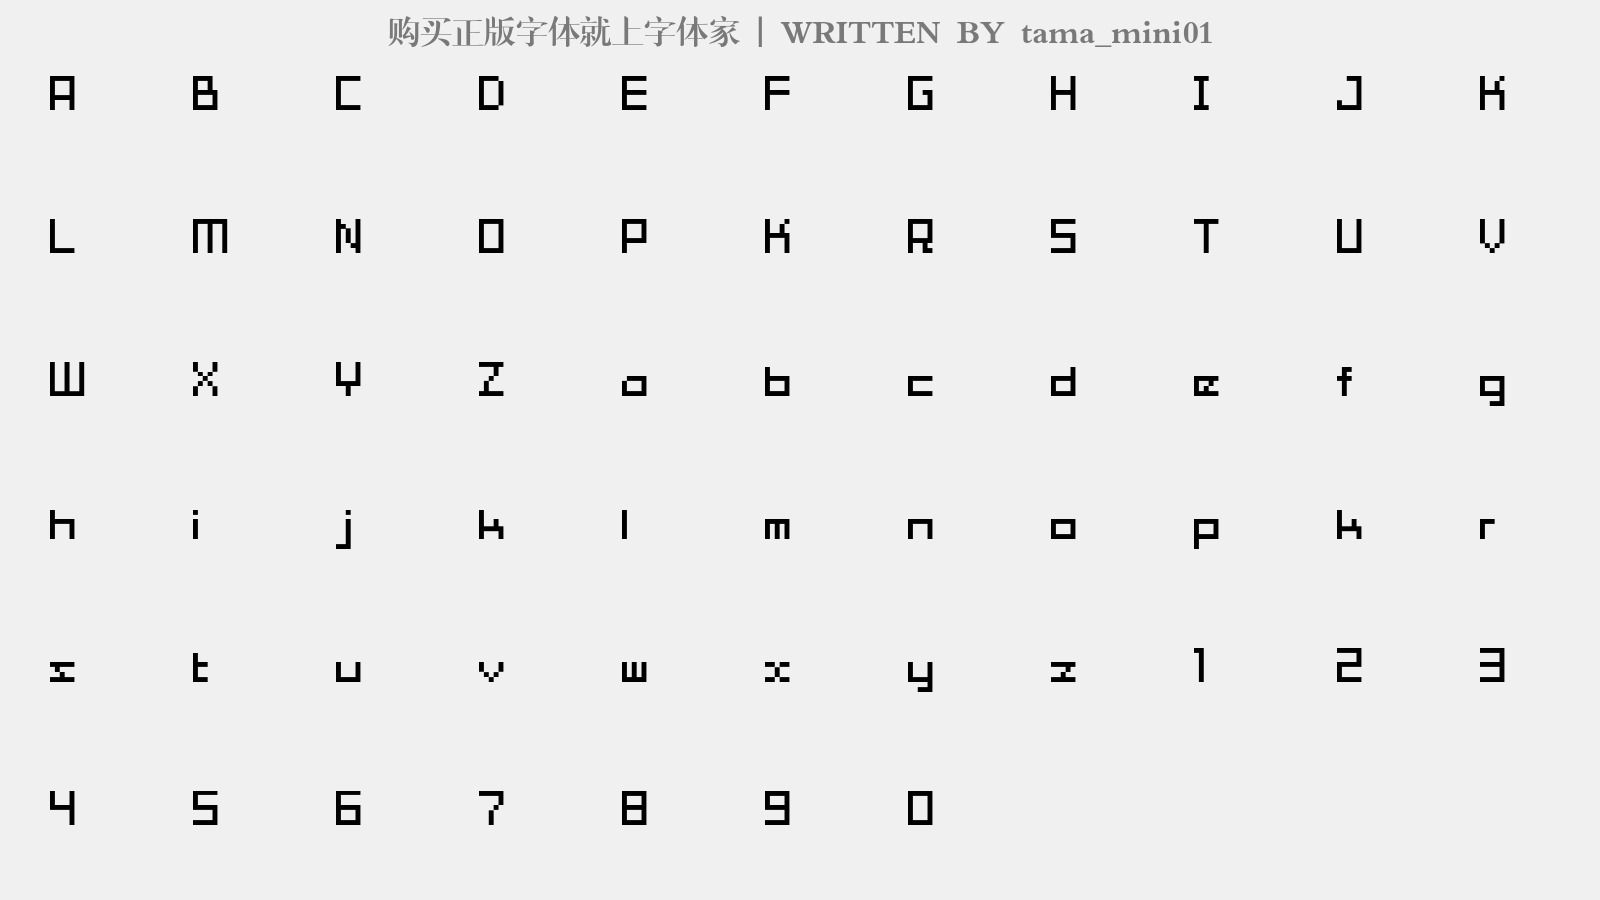 tama_mini01 - 大写字母/小写字母/数字